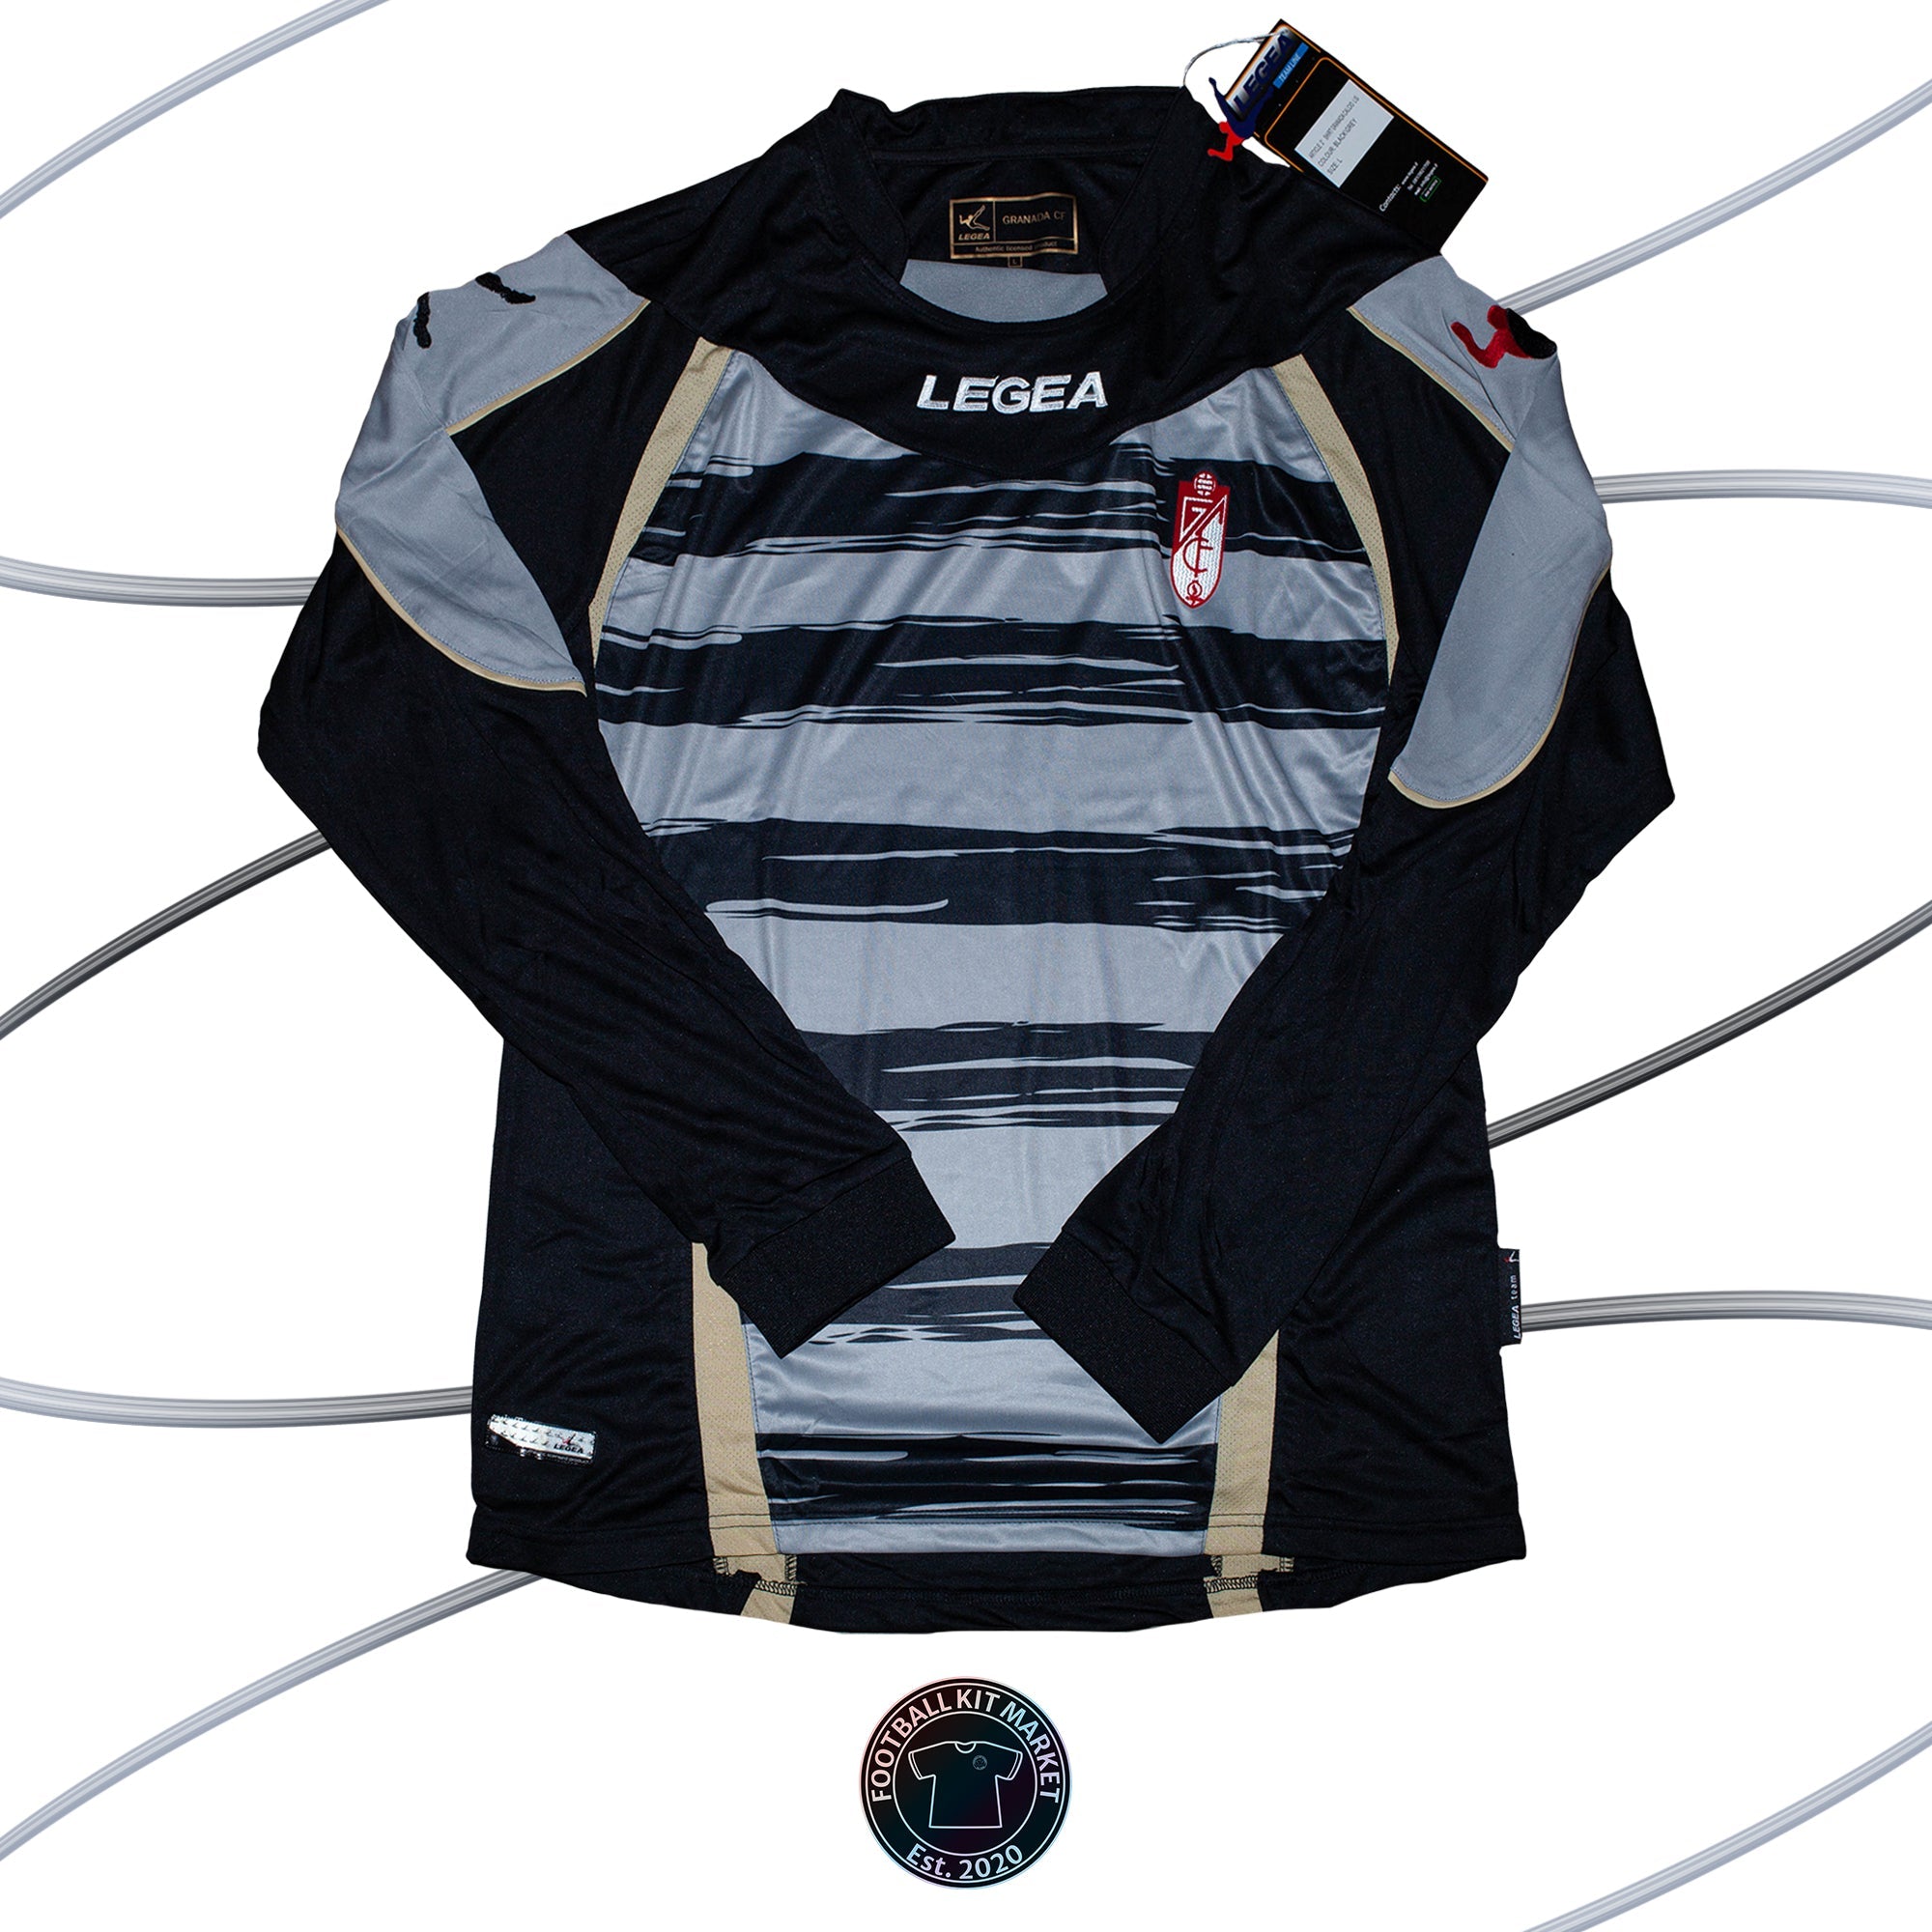 Genuine GRANADA CF Away (2012-2013) - LEGEA (L) - Product Image from Football Kit Market